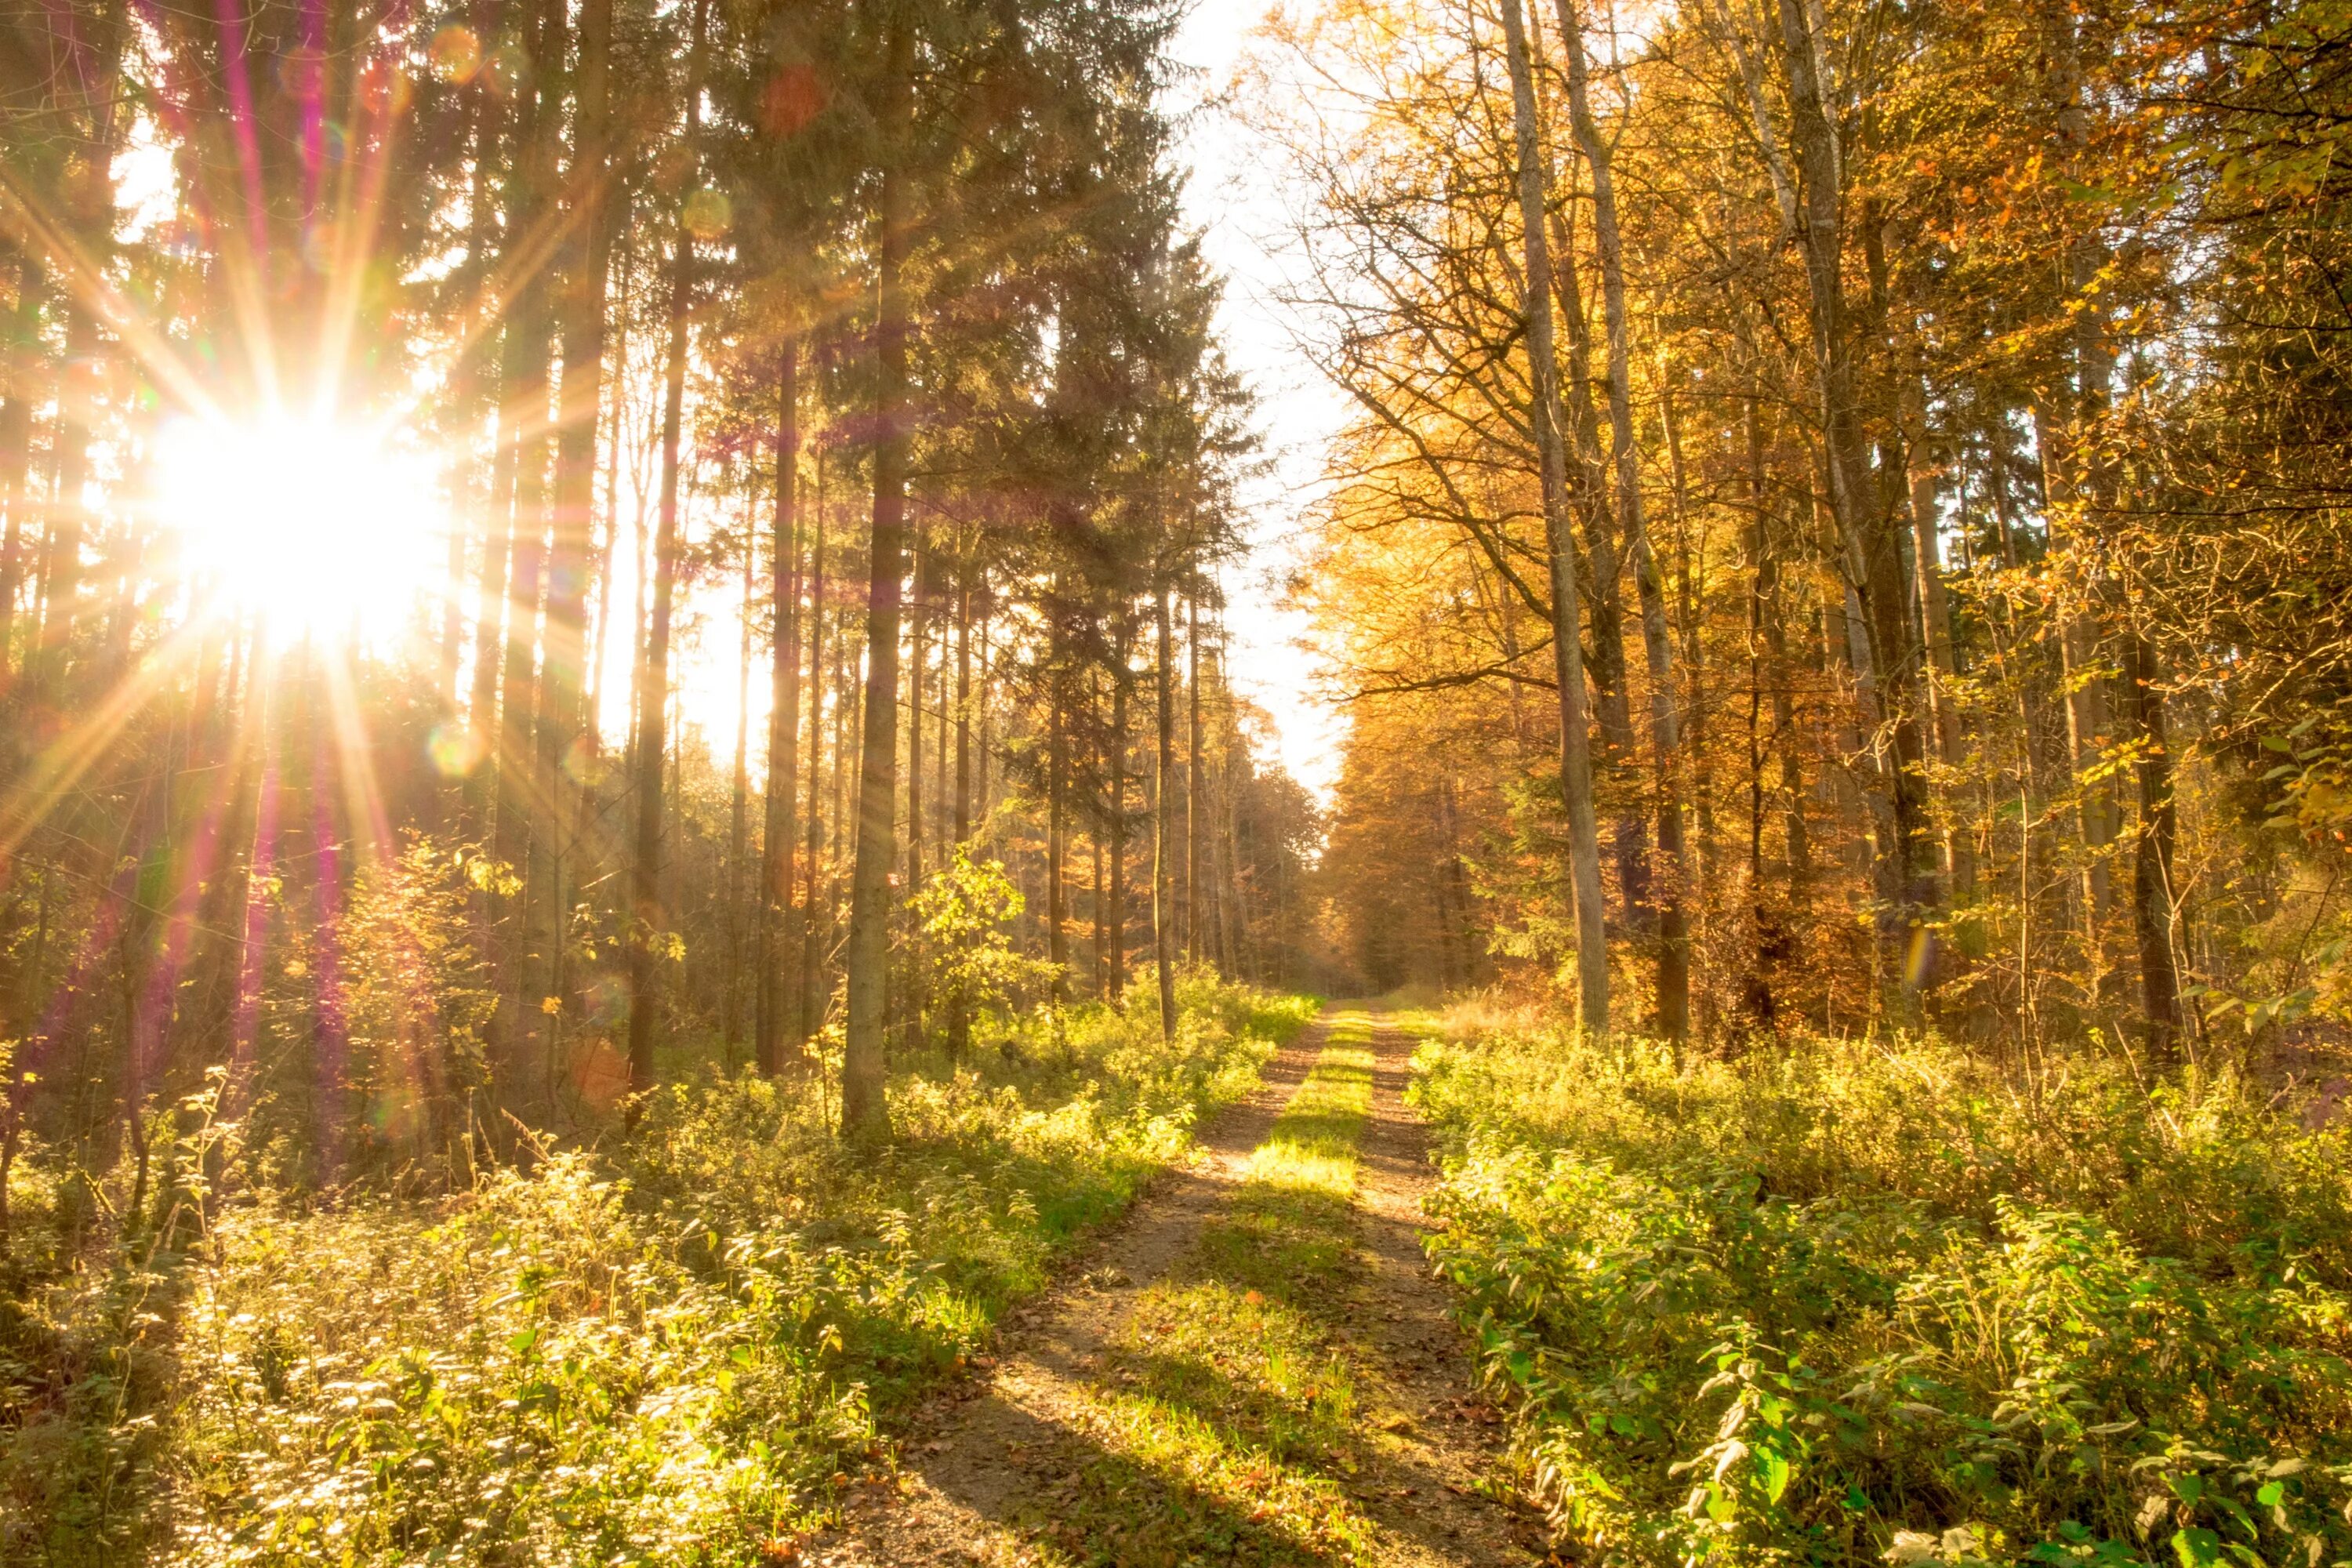 "Солнце в лесу". Летний лес. Осенний лес солнце. Солнечный пейзаж. Пригревает яркое солнце